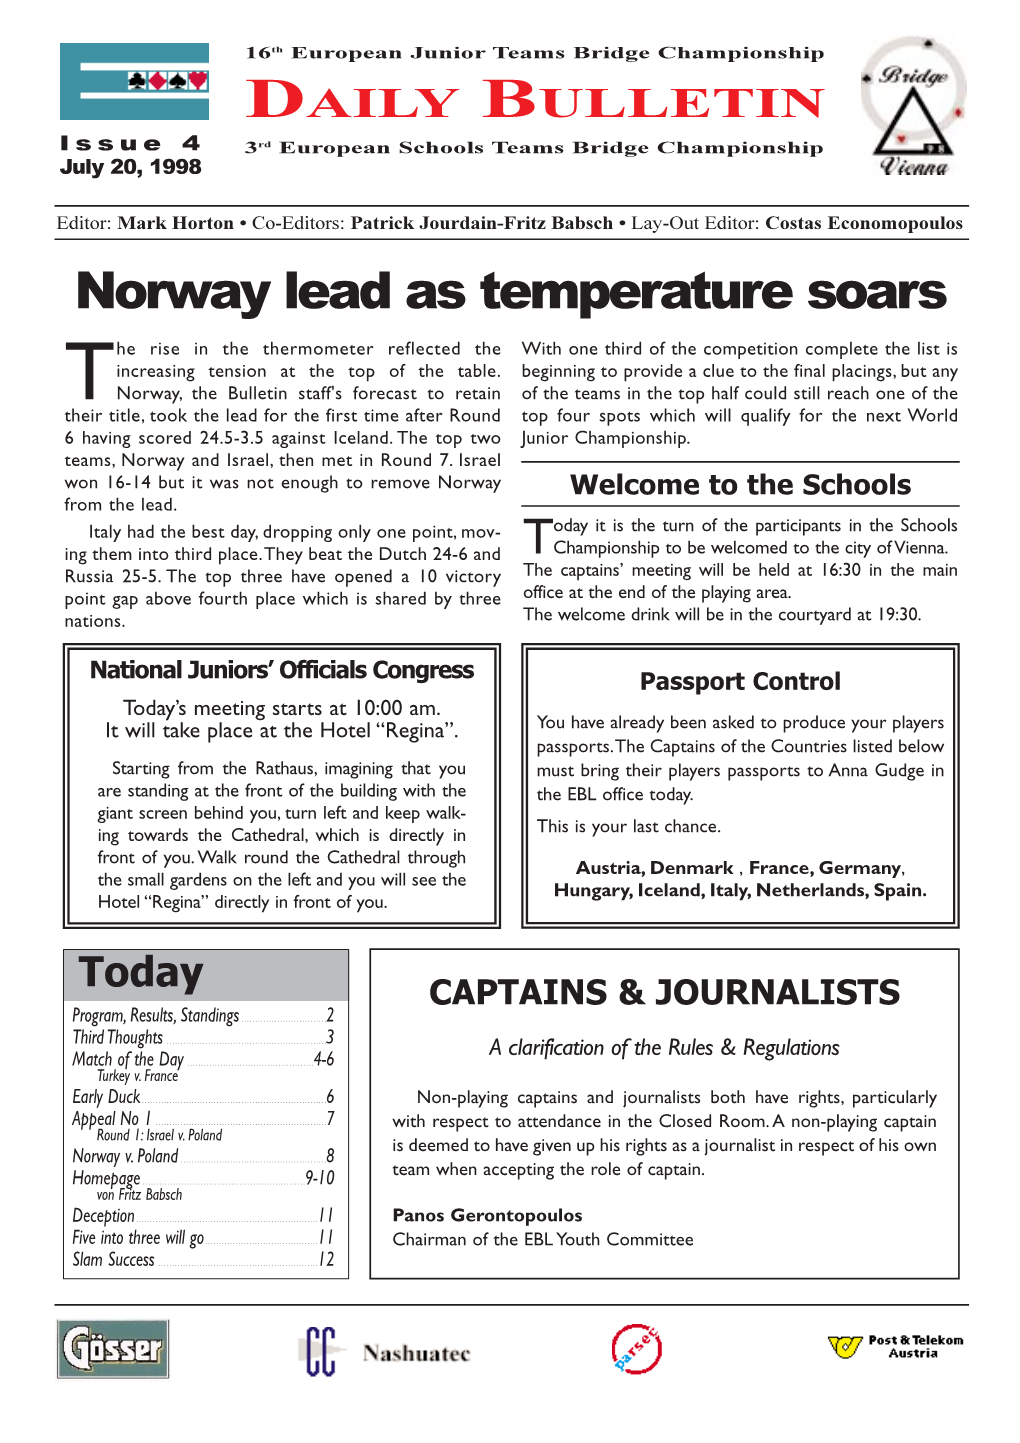 Norway Lead As Temperature Soars